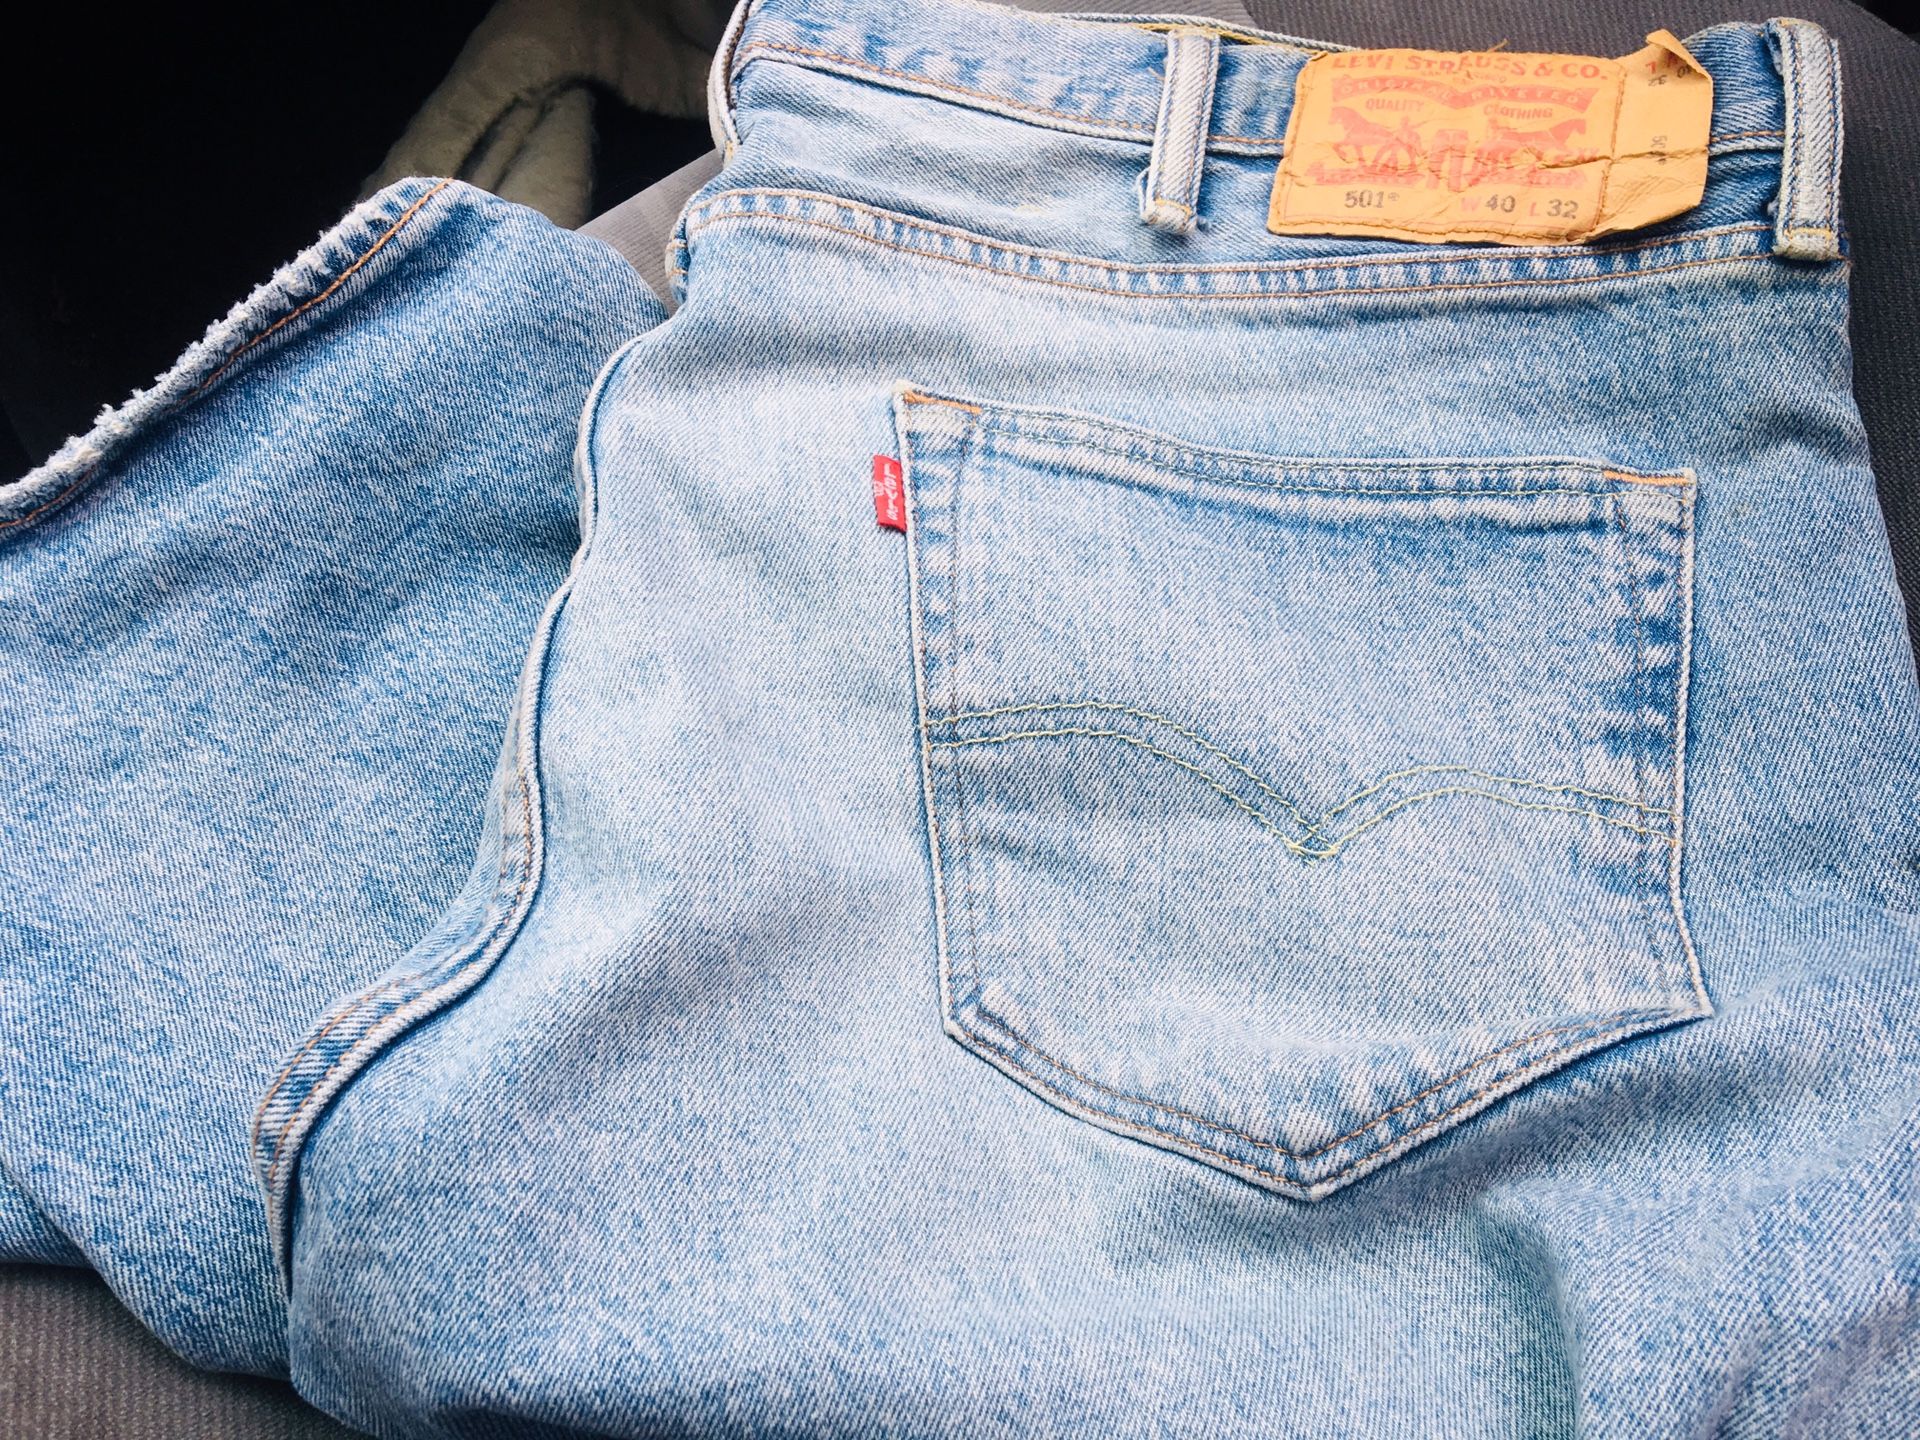 Levi jeans size 40 great condition 15 bucks